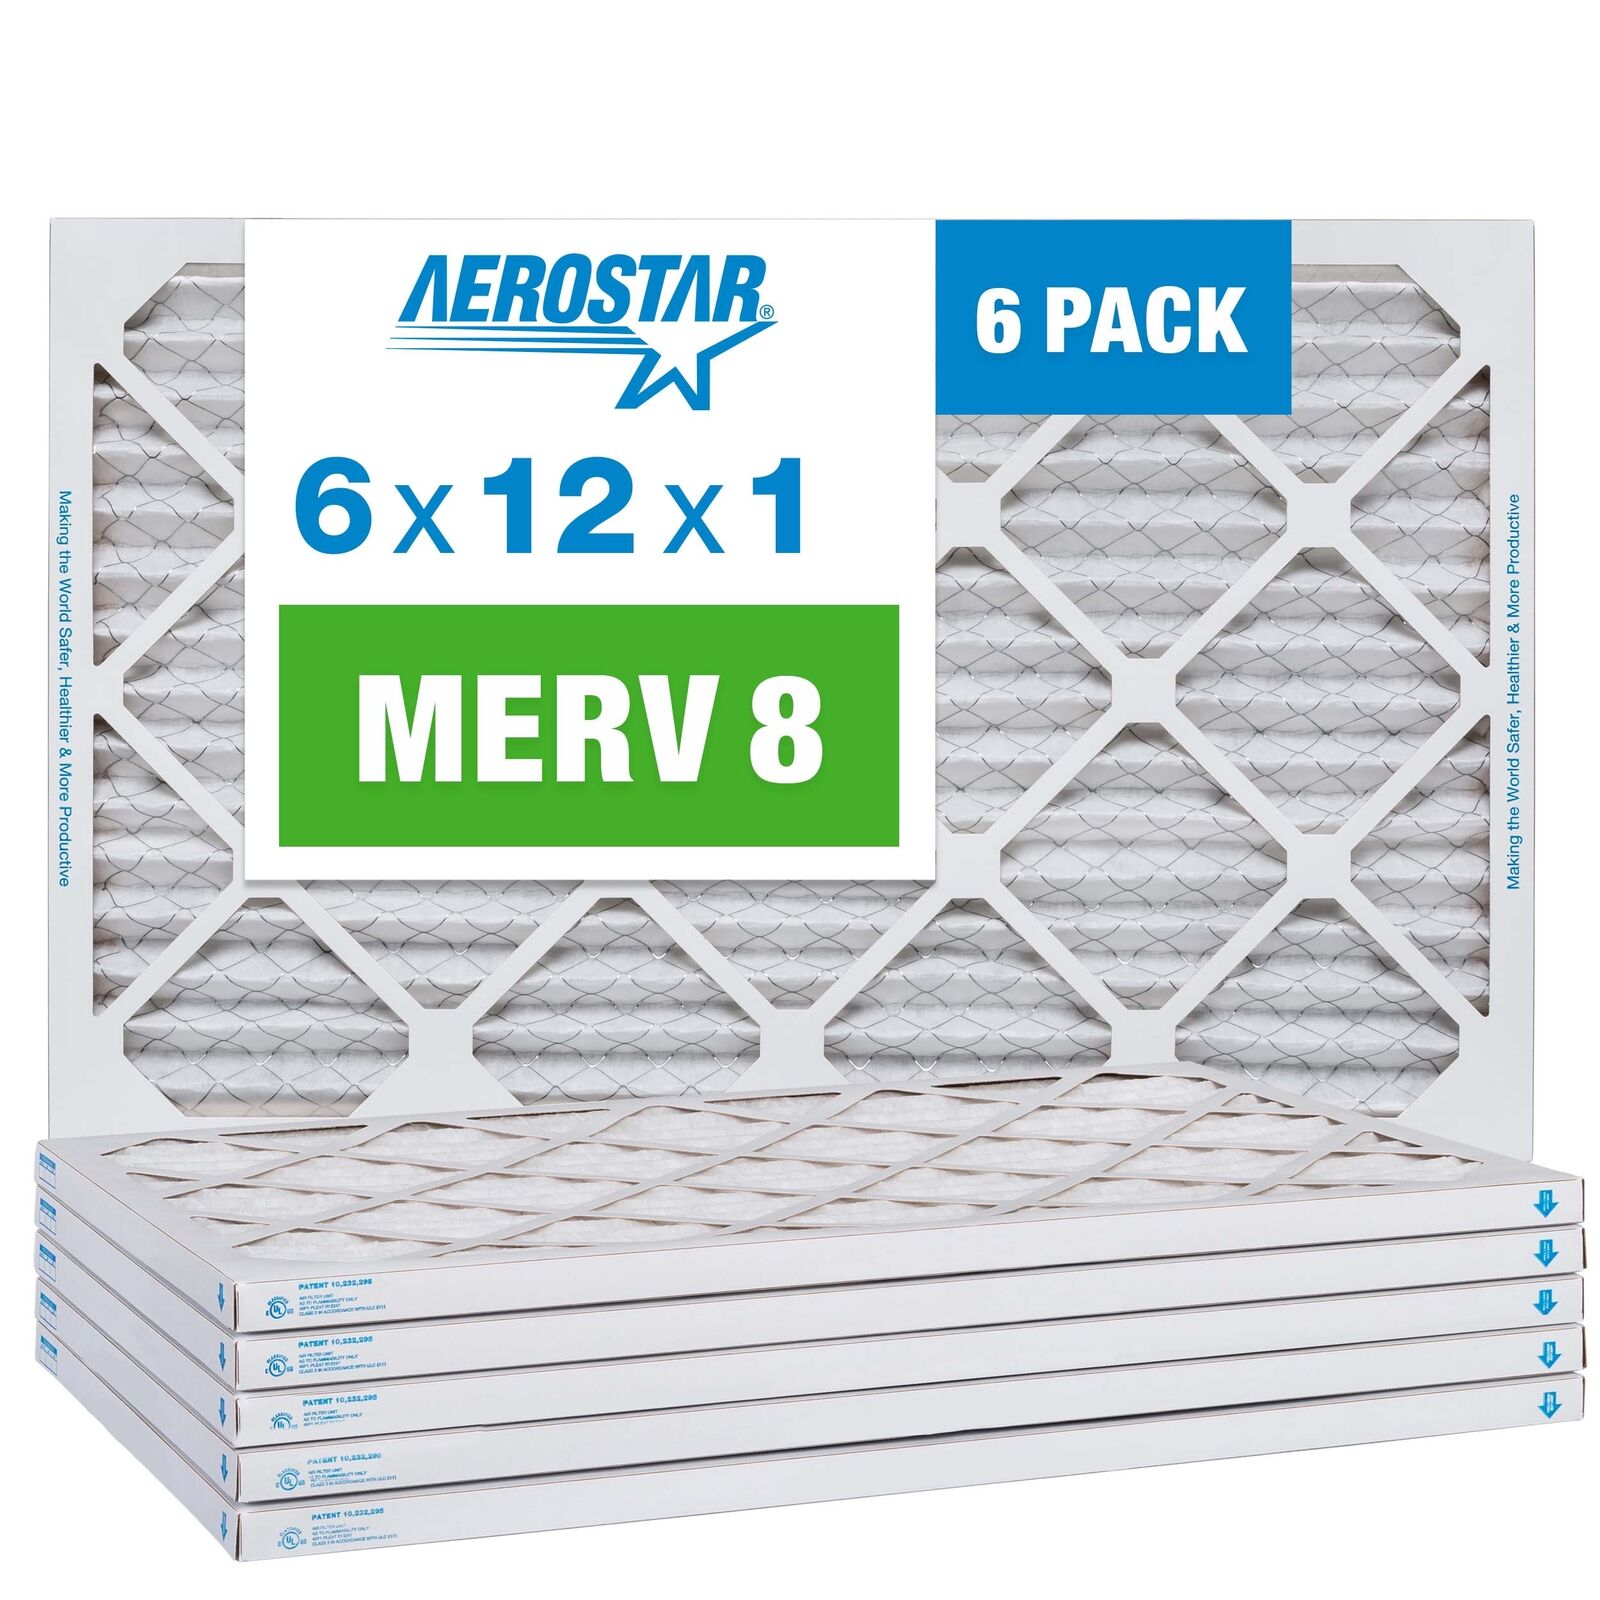 Aerostar 6x12x1 MERV 8 Air Filter, 6 Pack (6\